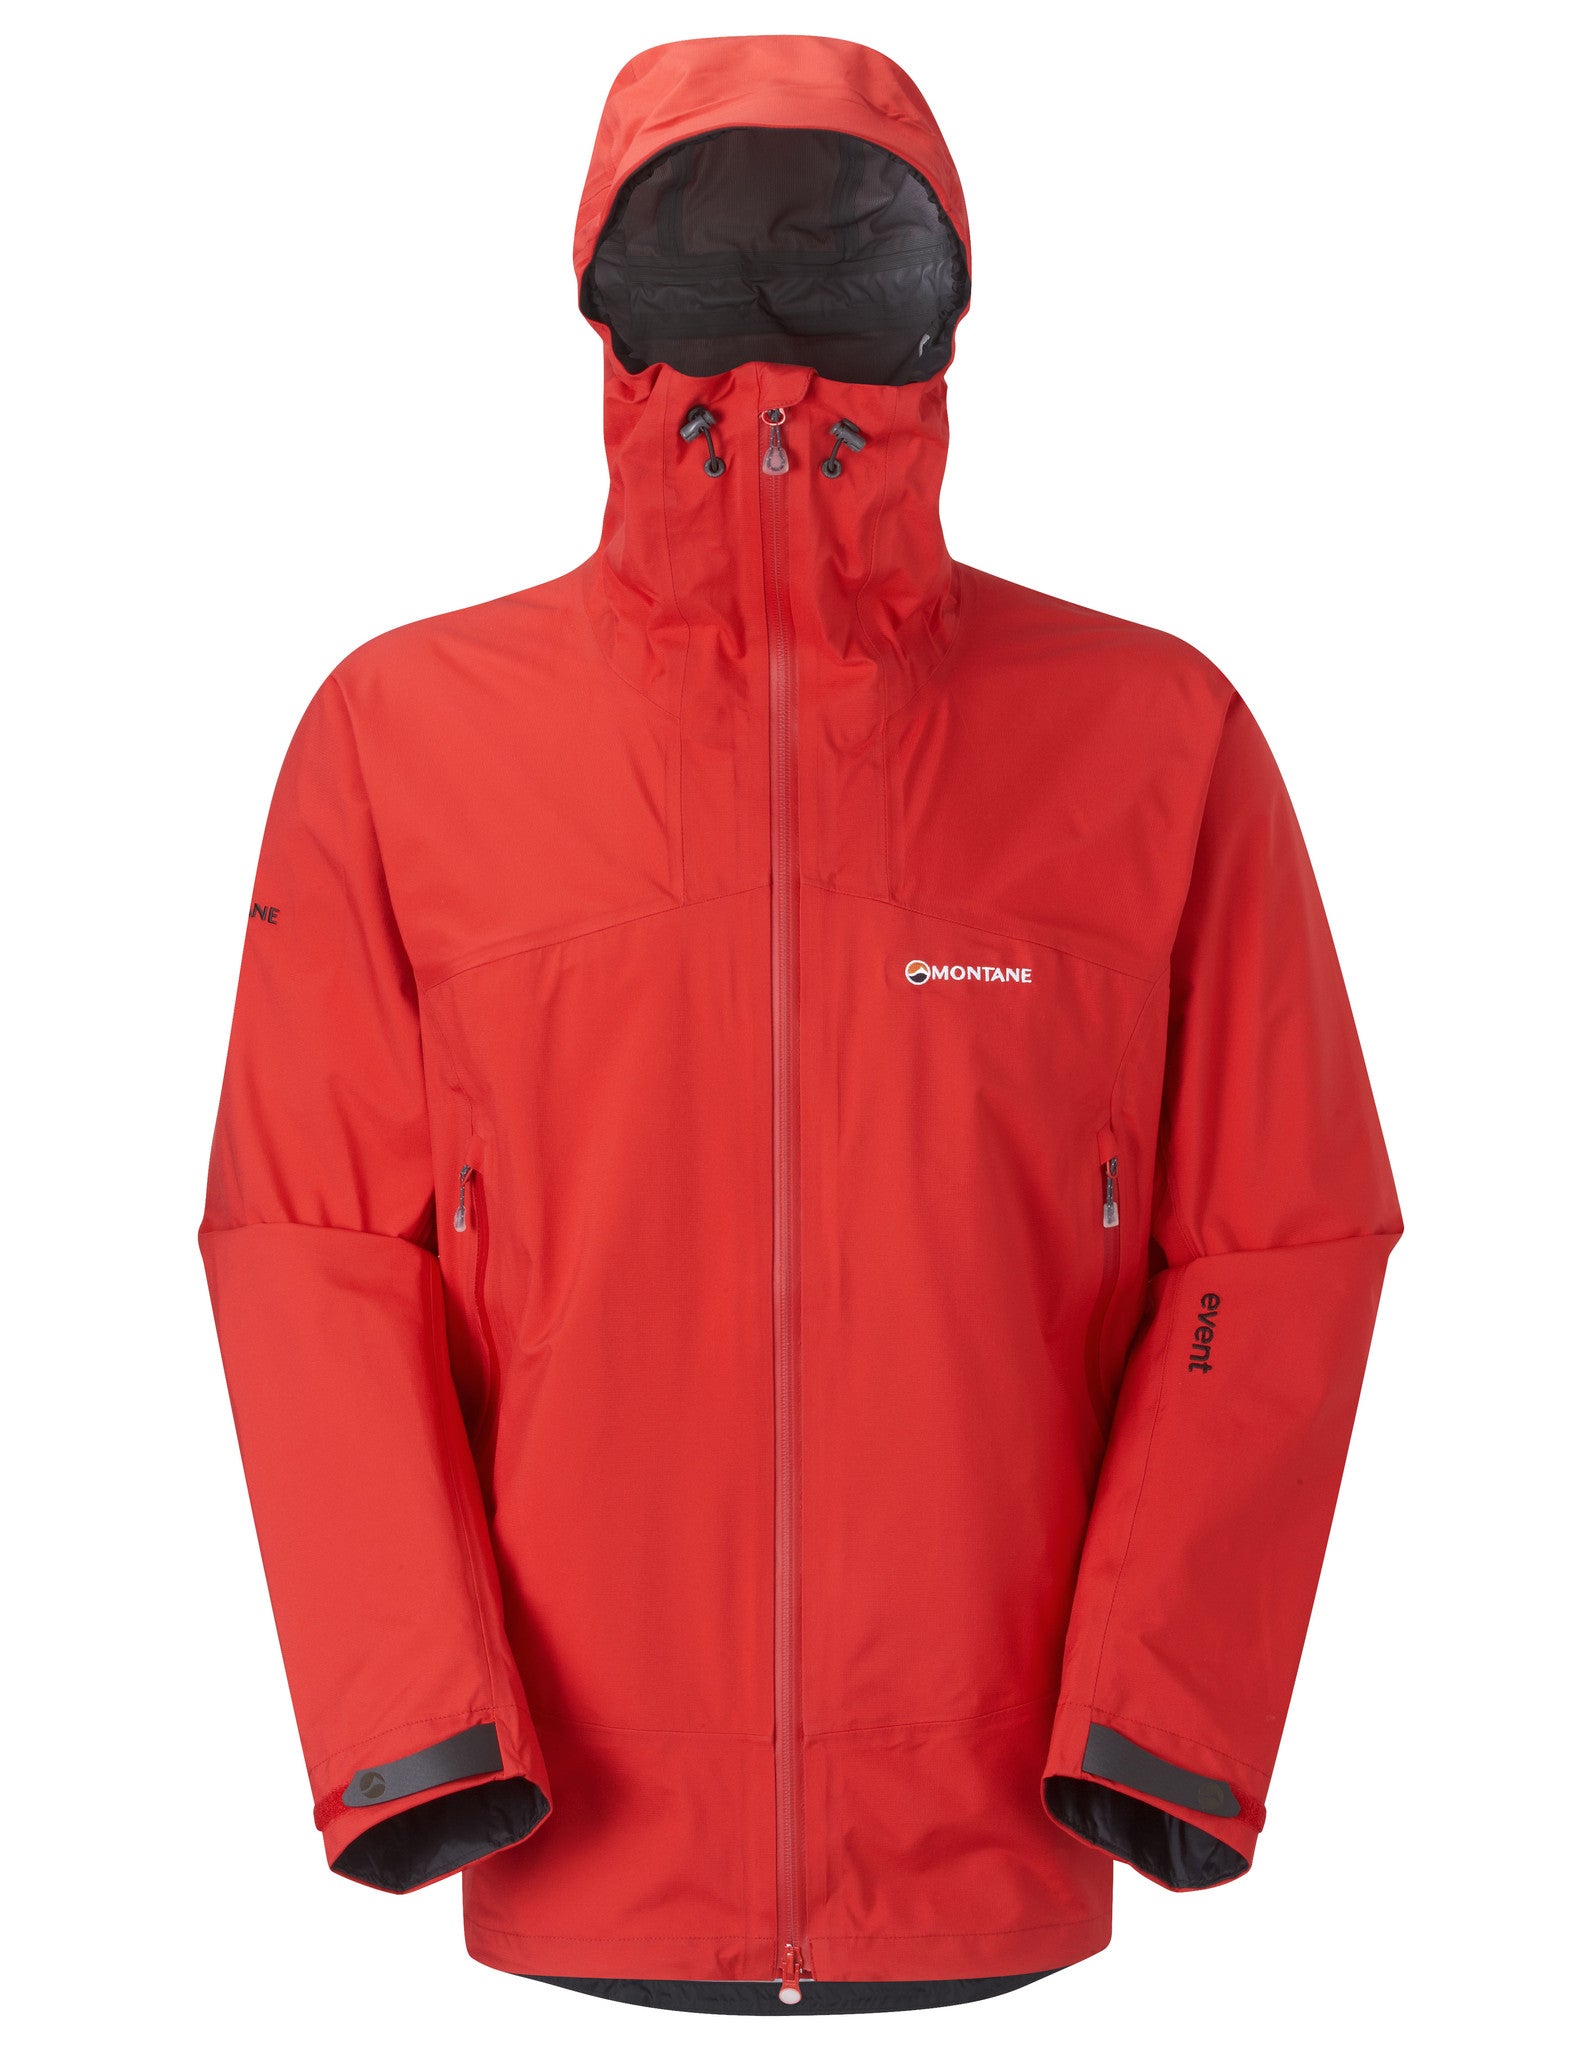 Montane-Women's Direct Ascent eVent¨ Jacket-Women's waterproof-Alpine Red-XS-Gearaholic.com.sg